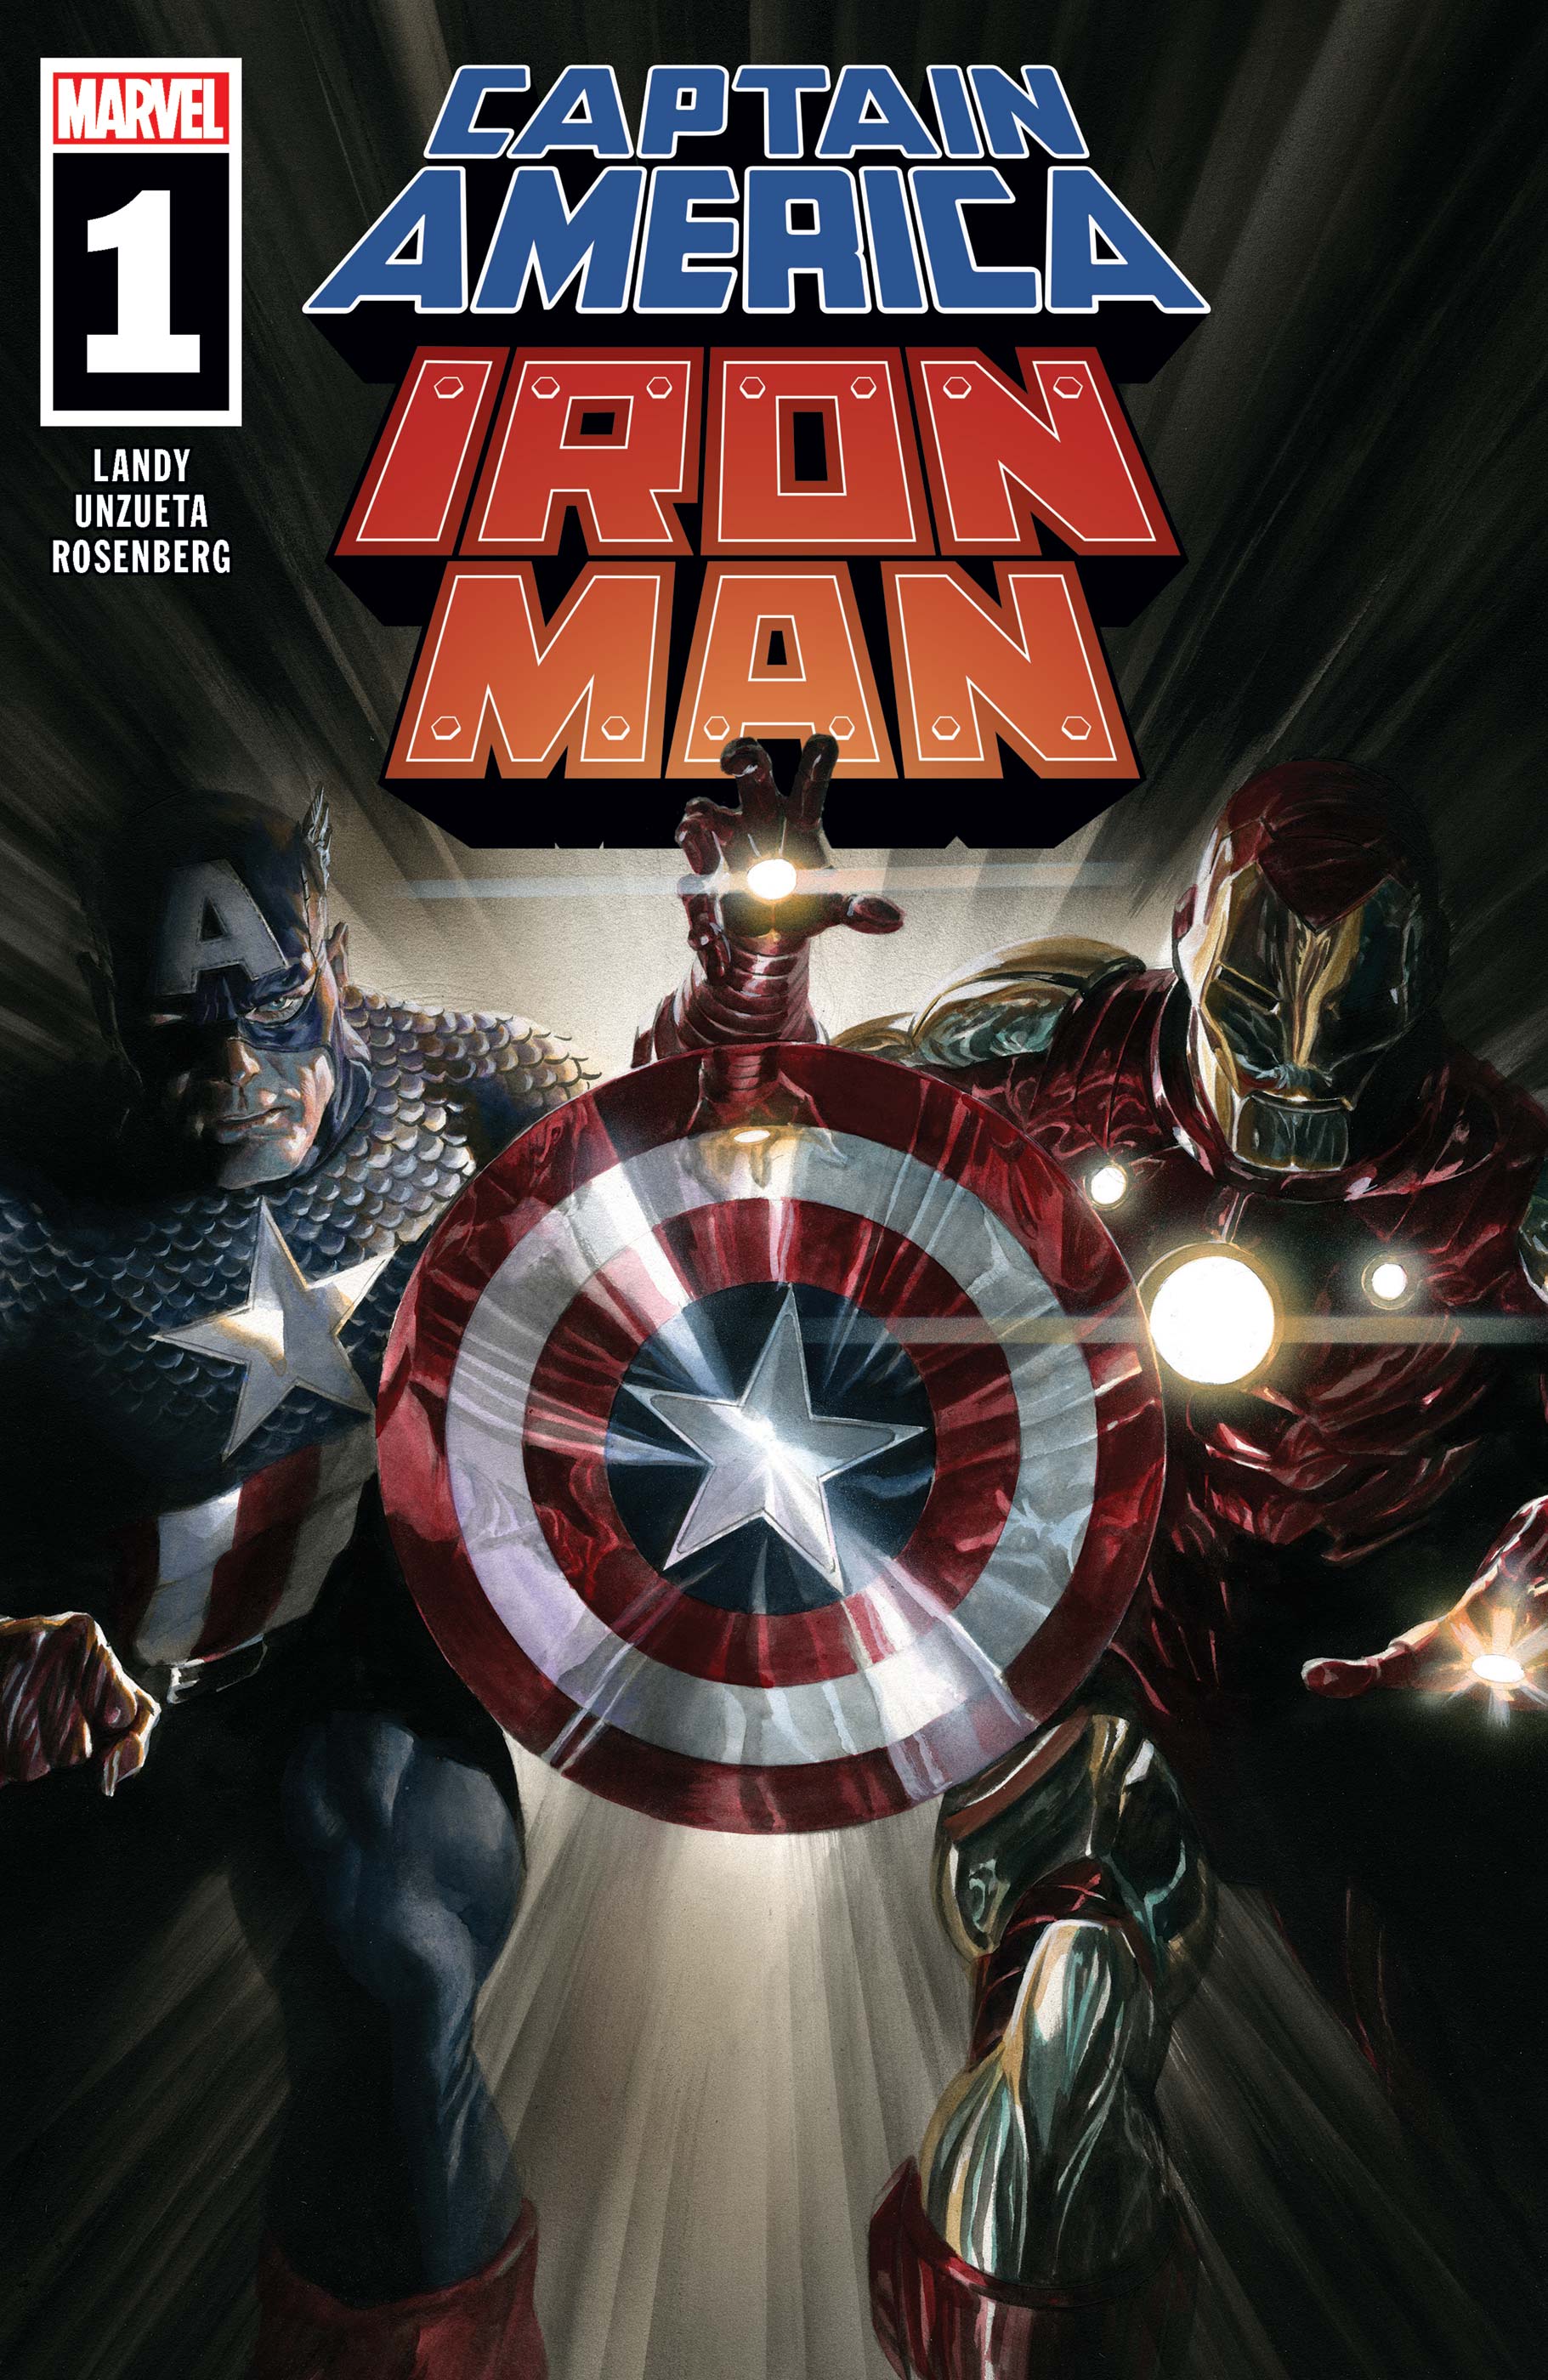 Captain america and iron man comic